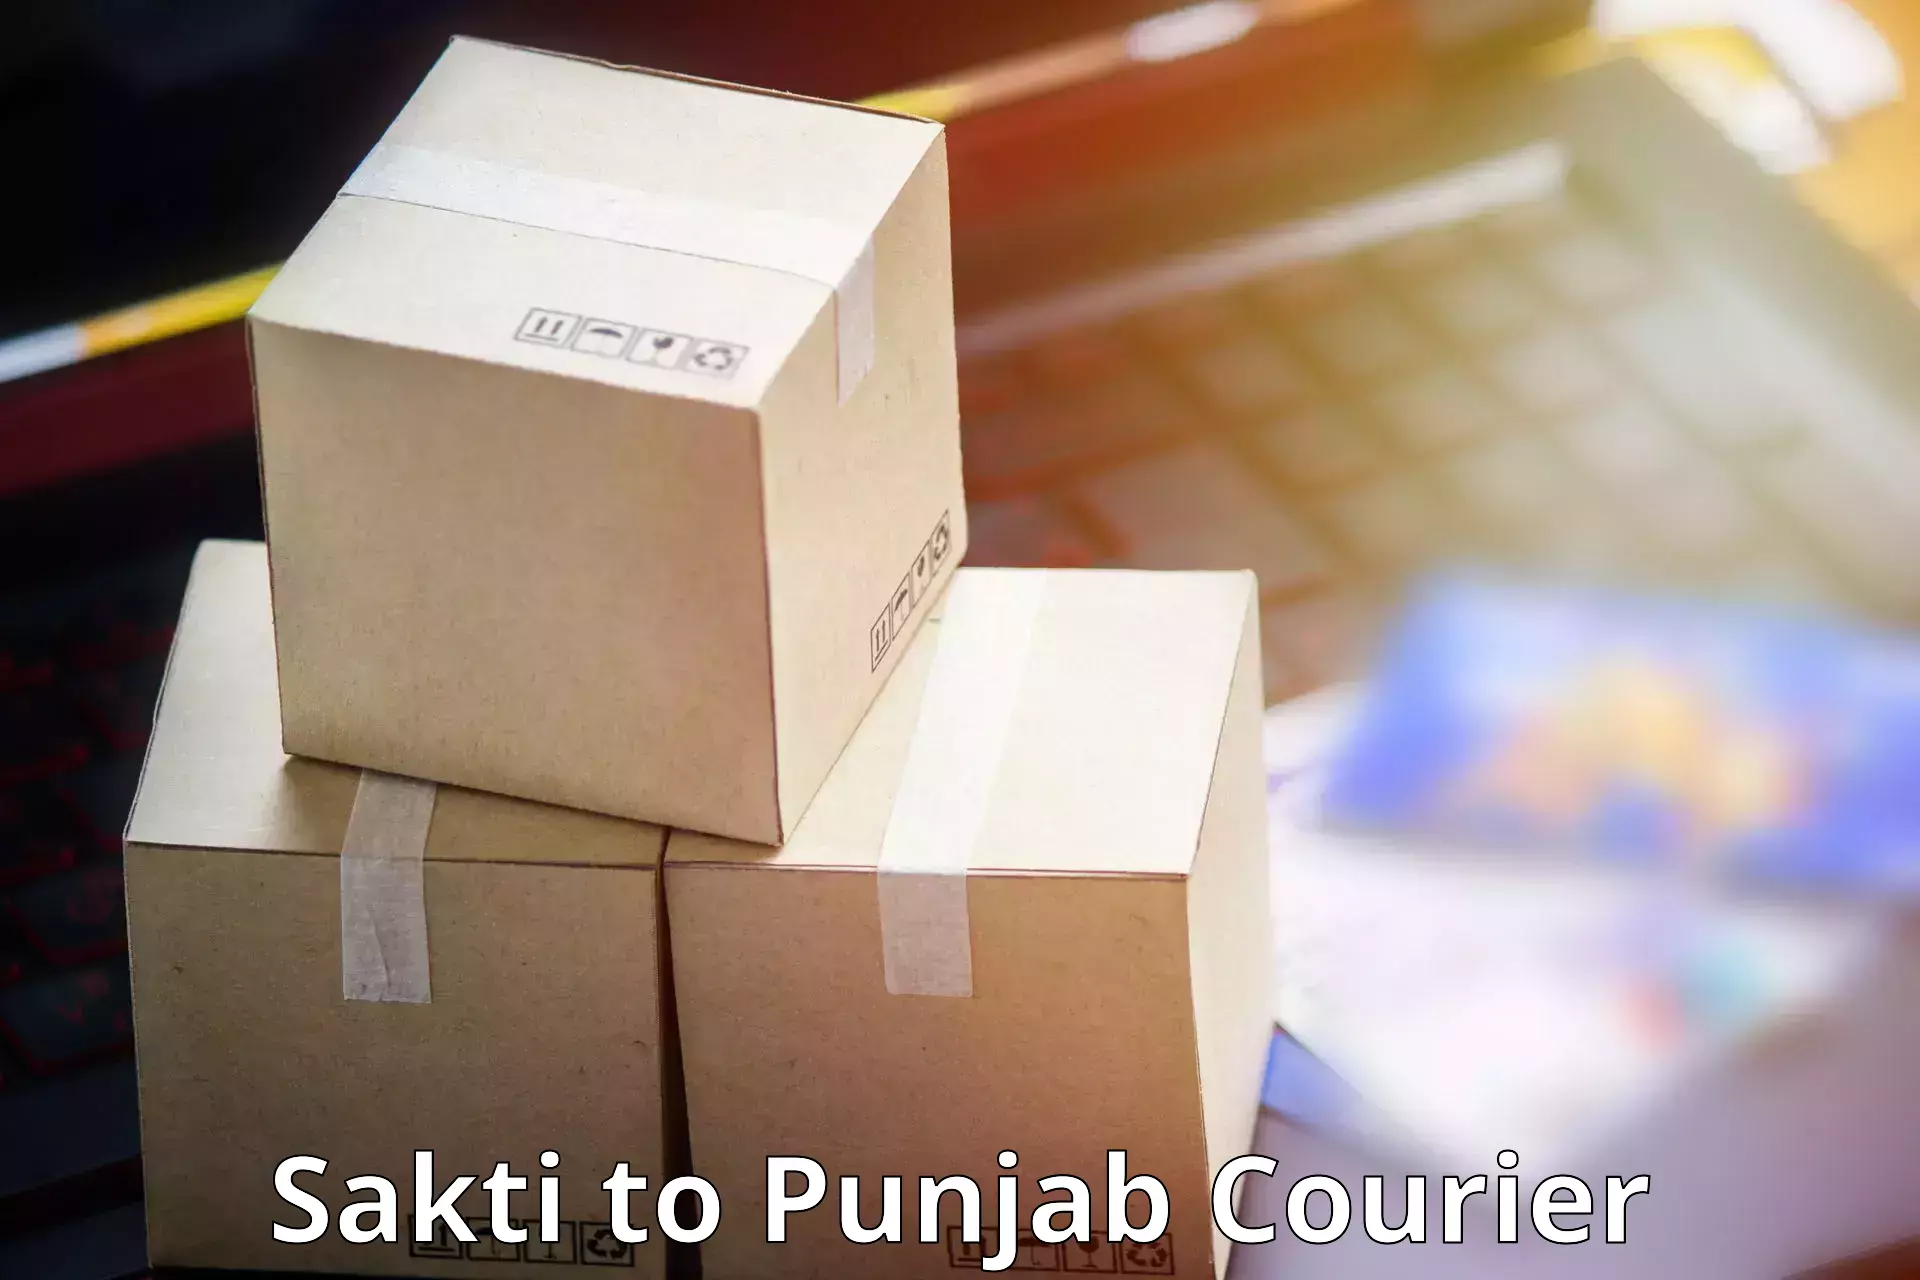 Next-day freight services Sakti to Punjab